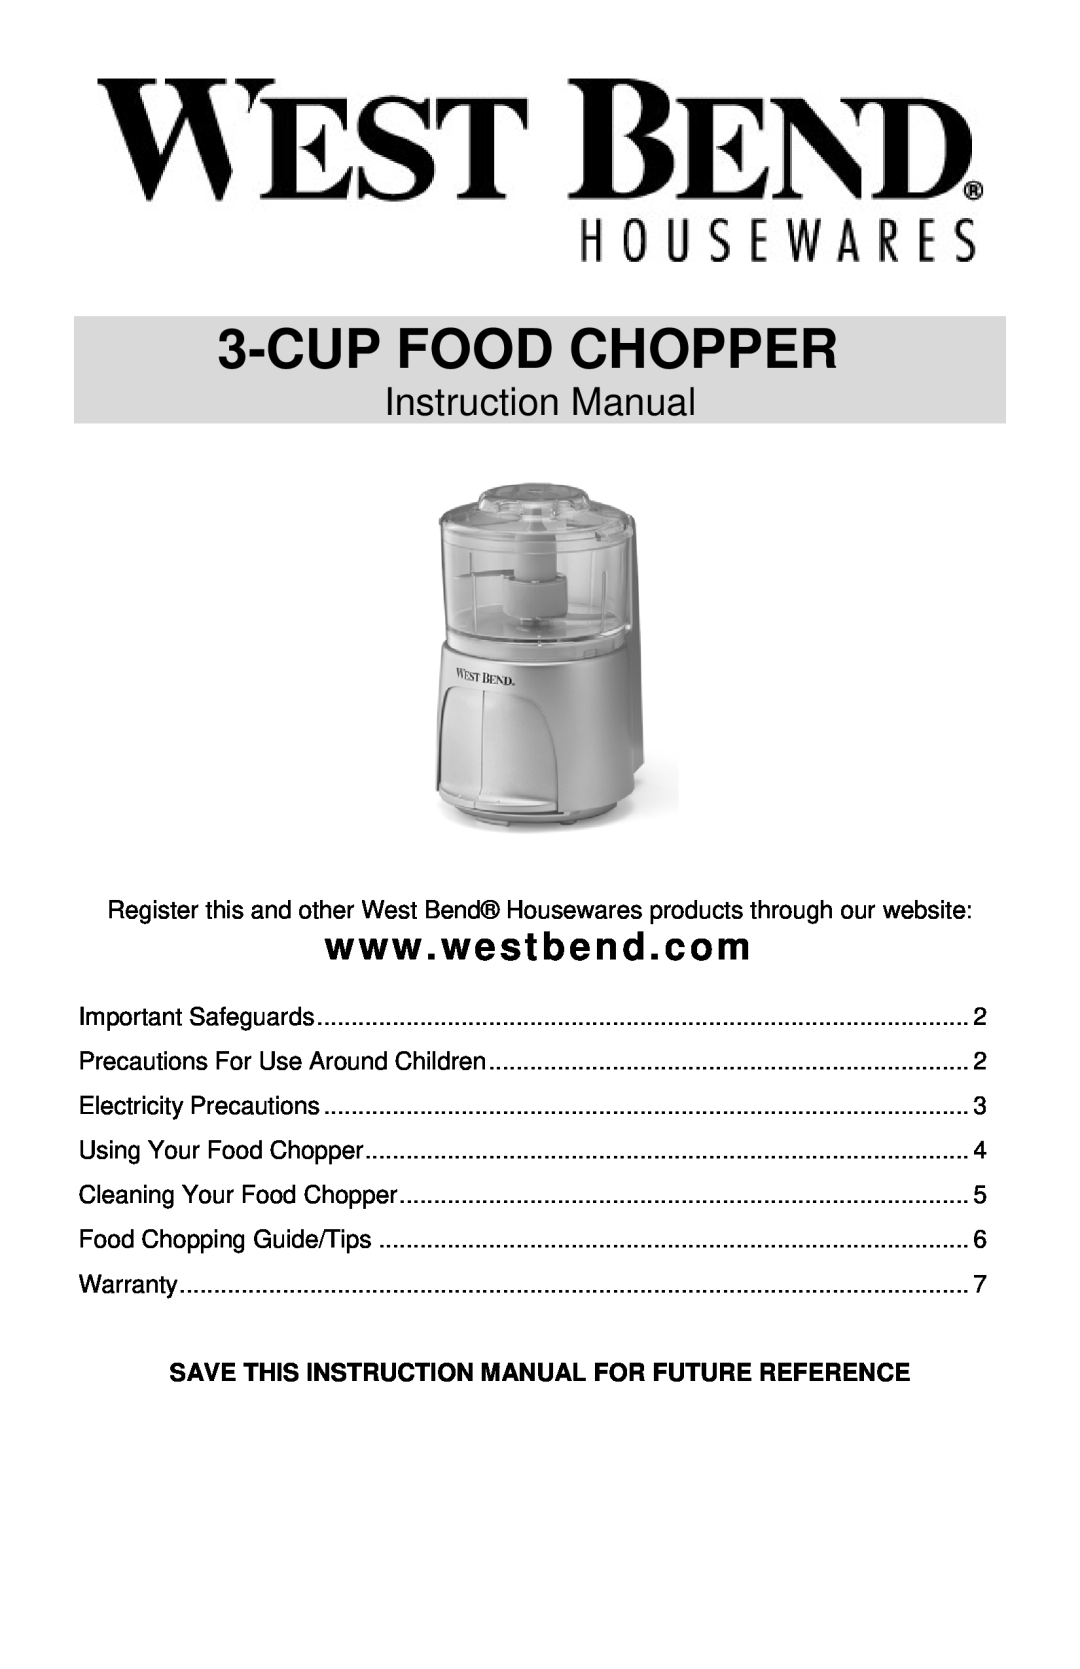 West Bend L5685 instruction manual Cupfood Chopper 